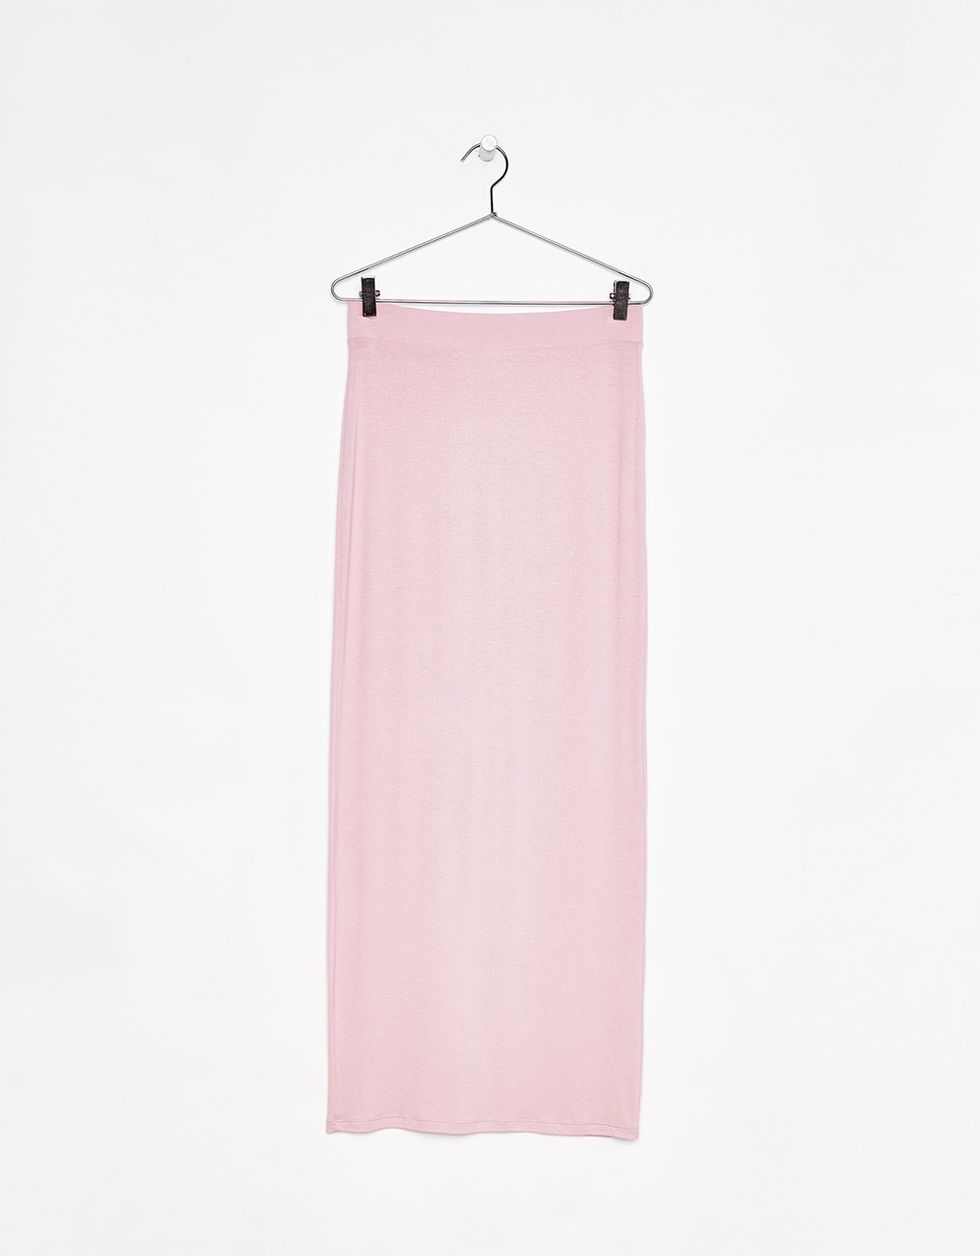 Pink, Clothing, Dress, Peach, Textile, Clothes hanger, T-shirt, Sleeve, Linens, Sleeveless shirt, 